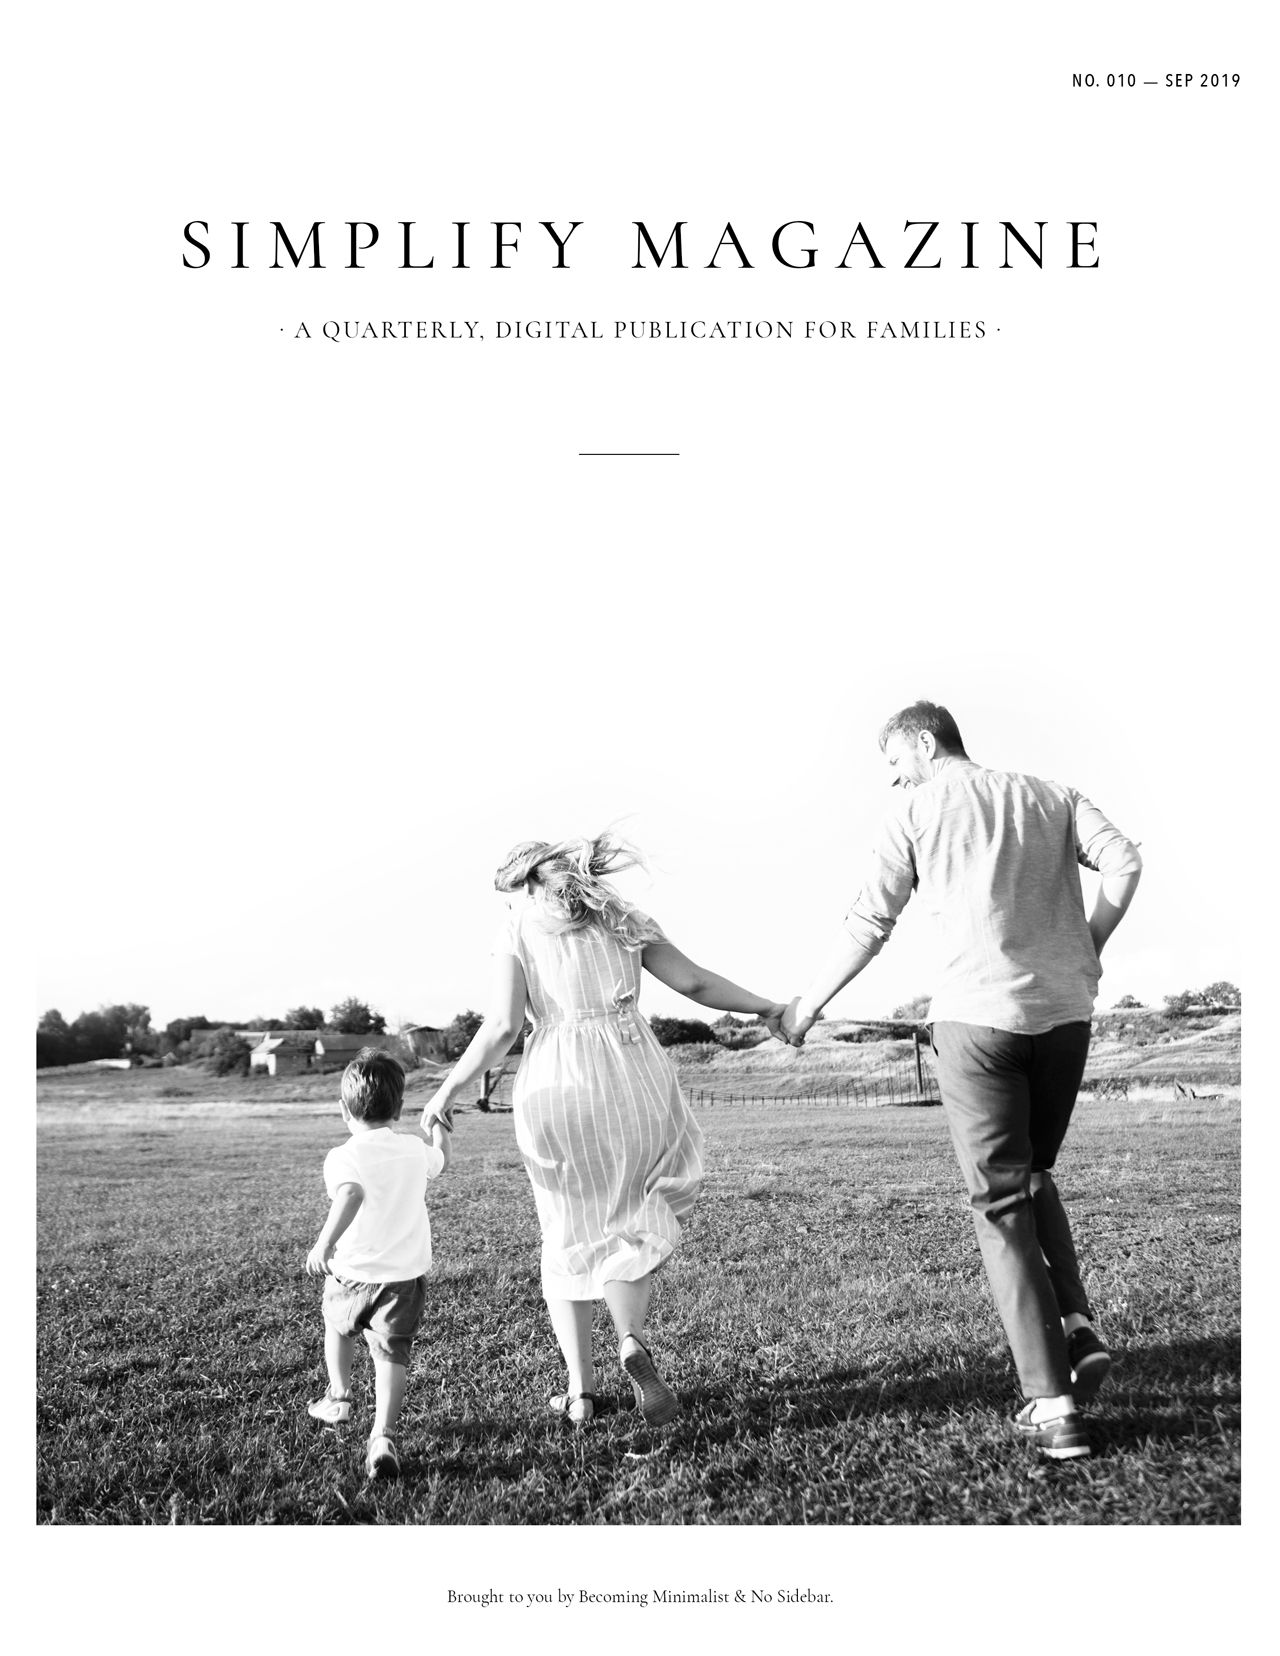 Simplify Magazine Issue #010